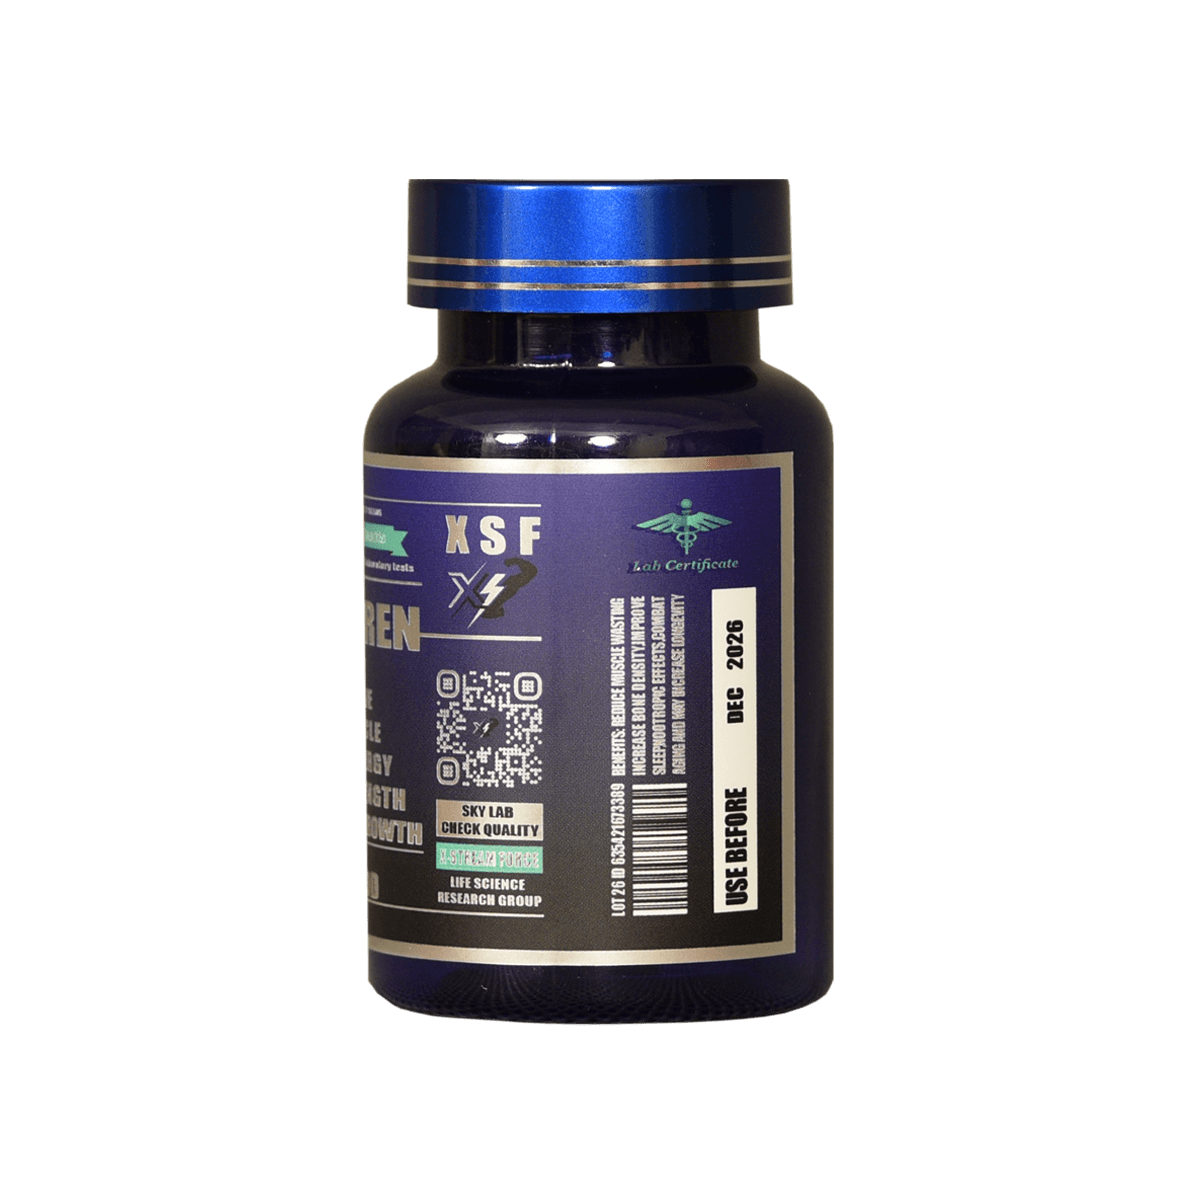 ibutamoren-mk677-capsules-sarm-900mg-muscle shop-xstreamforce-for recomp-rejuvenation-strength-volume-buy online✦mk677 sarms✦ fitness supplements-muscle-hunter